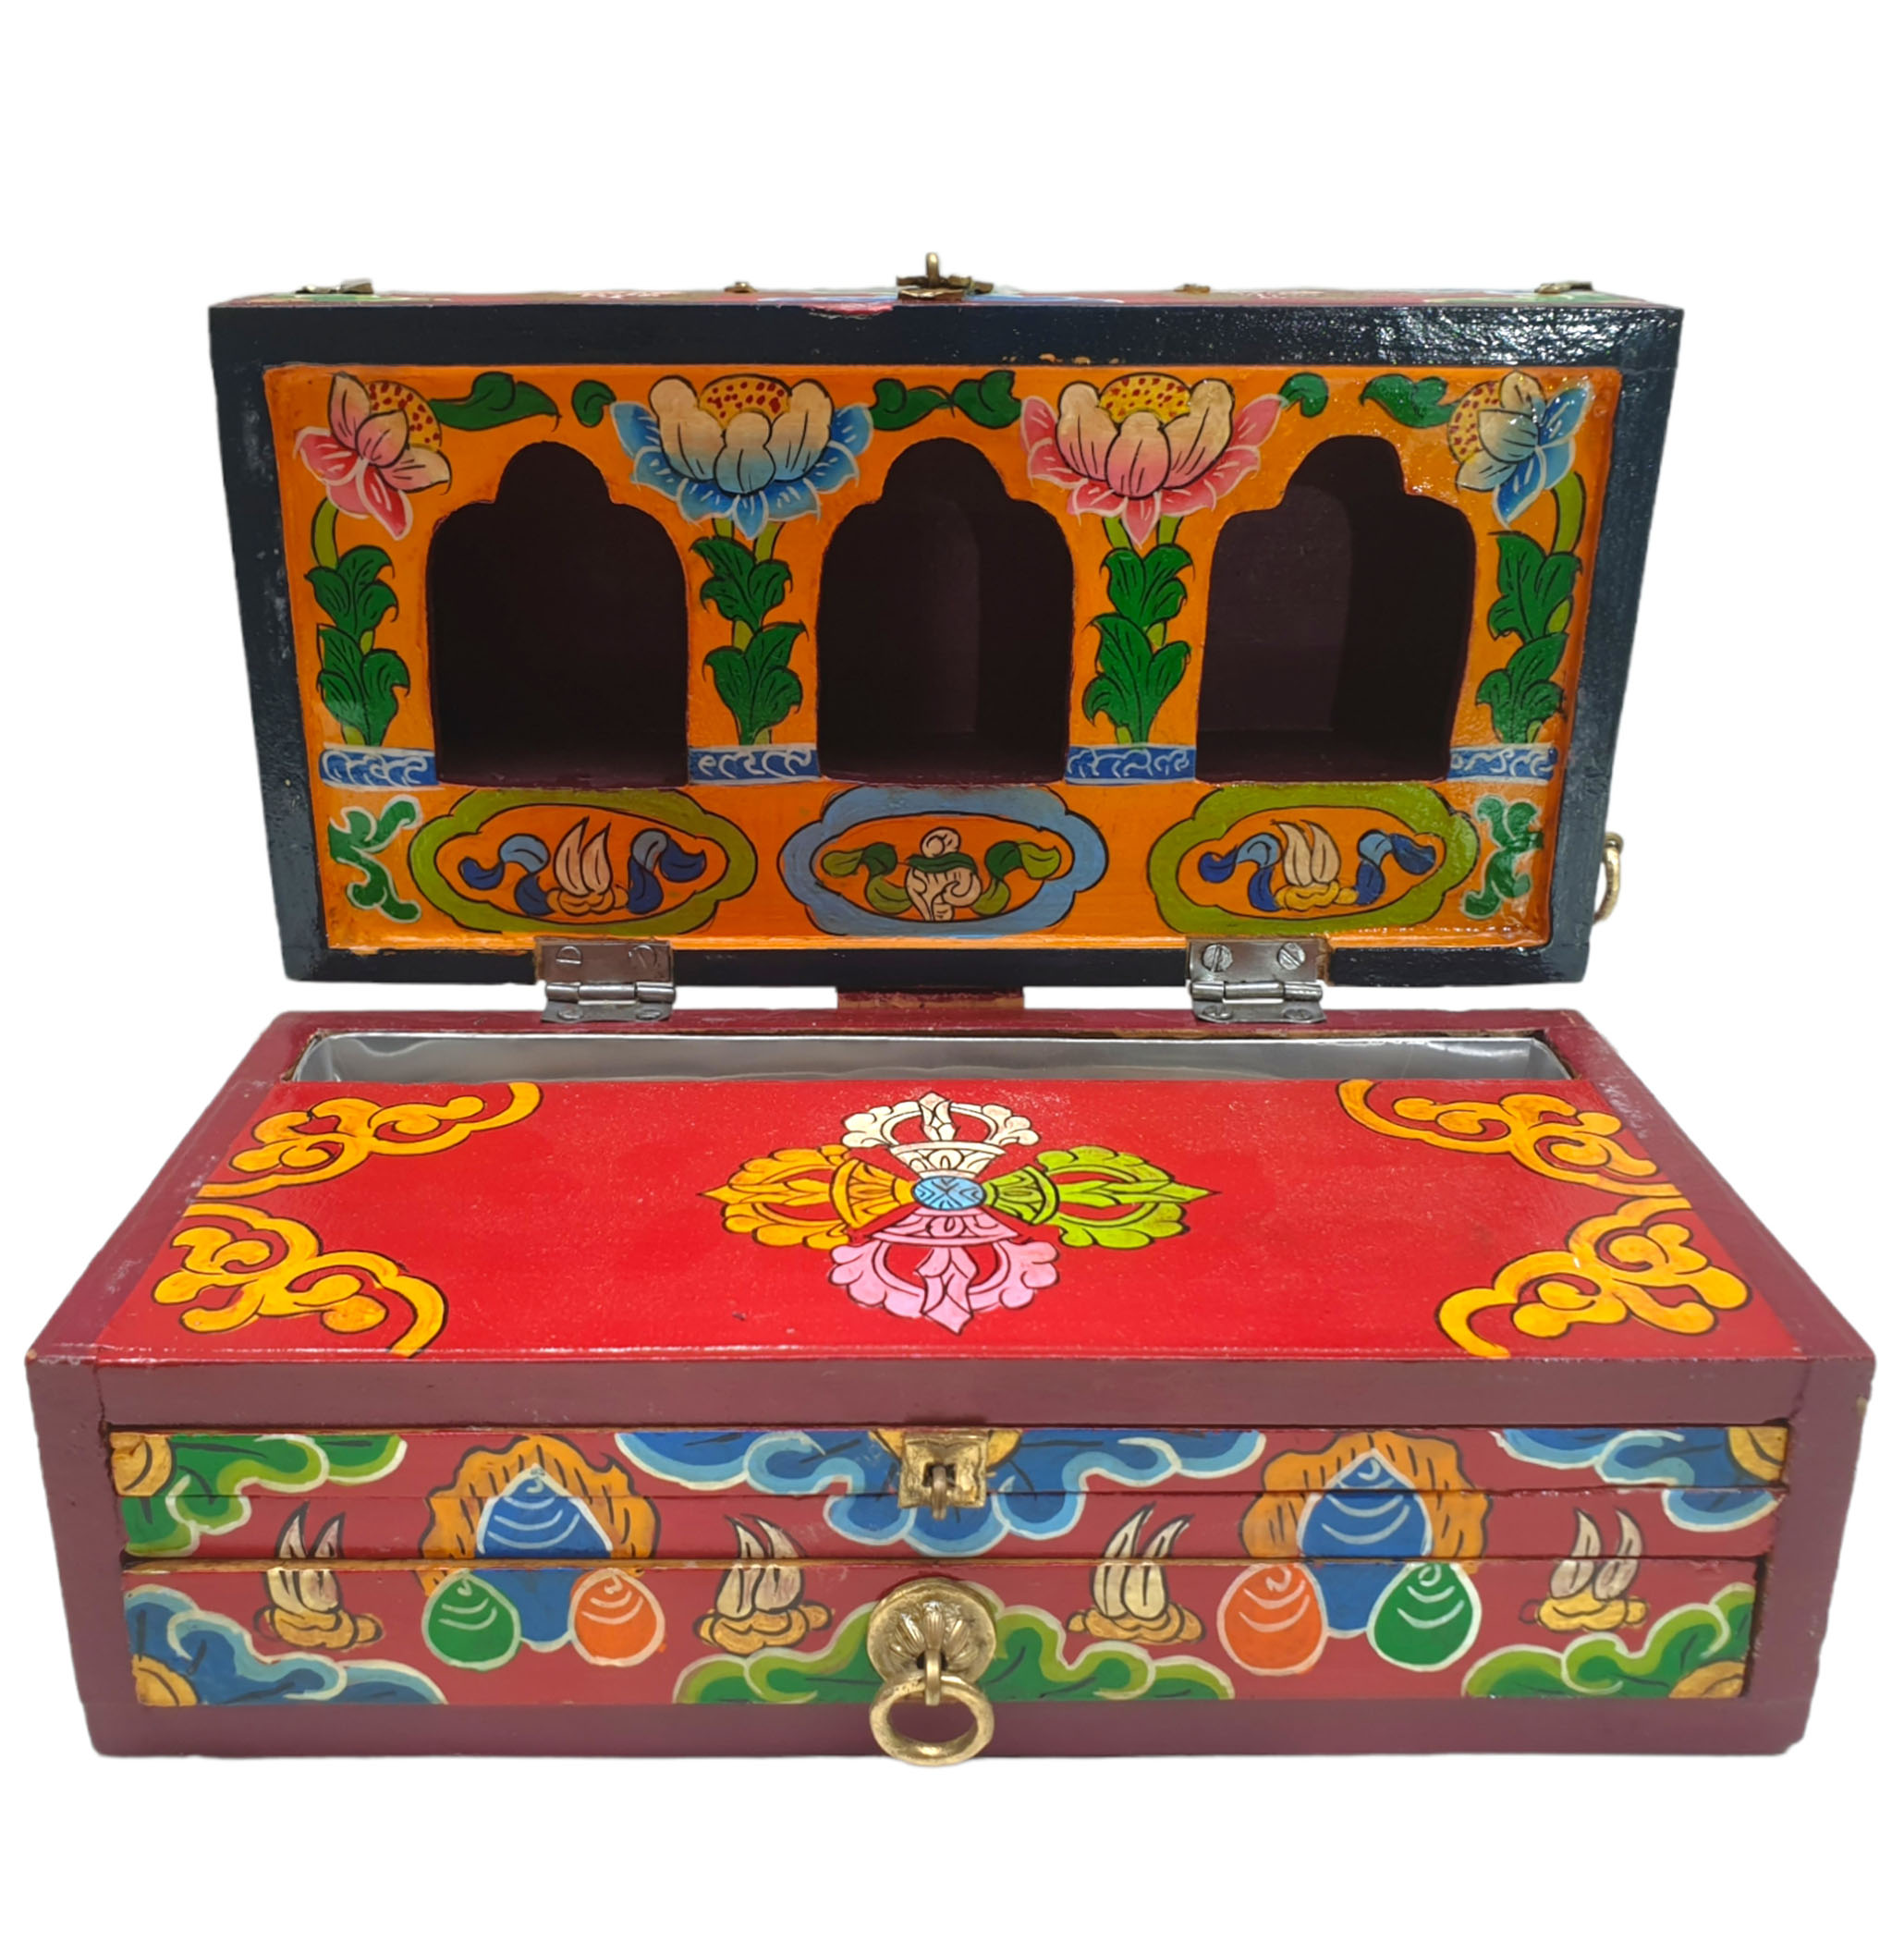 Buddhist Handmade Wooden Traveling Altar chesum Box, foldable, With Three Buddhas